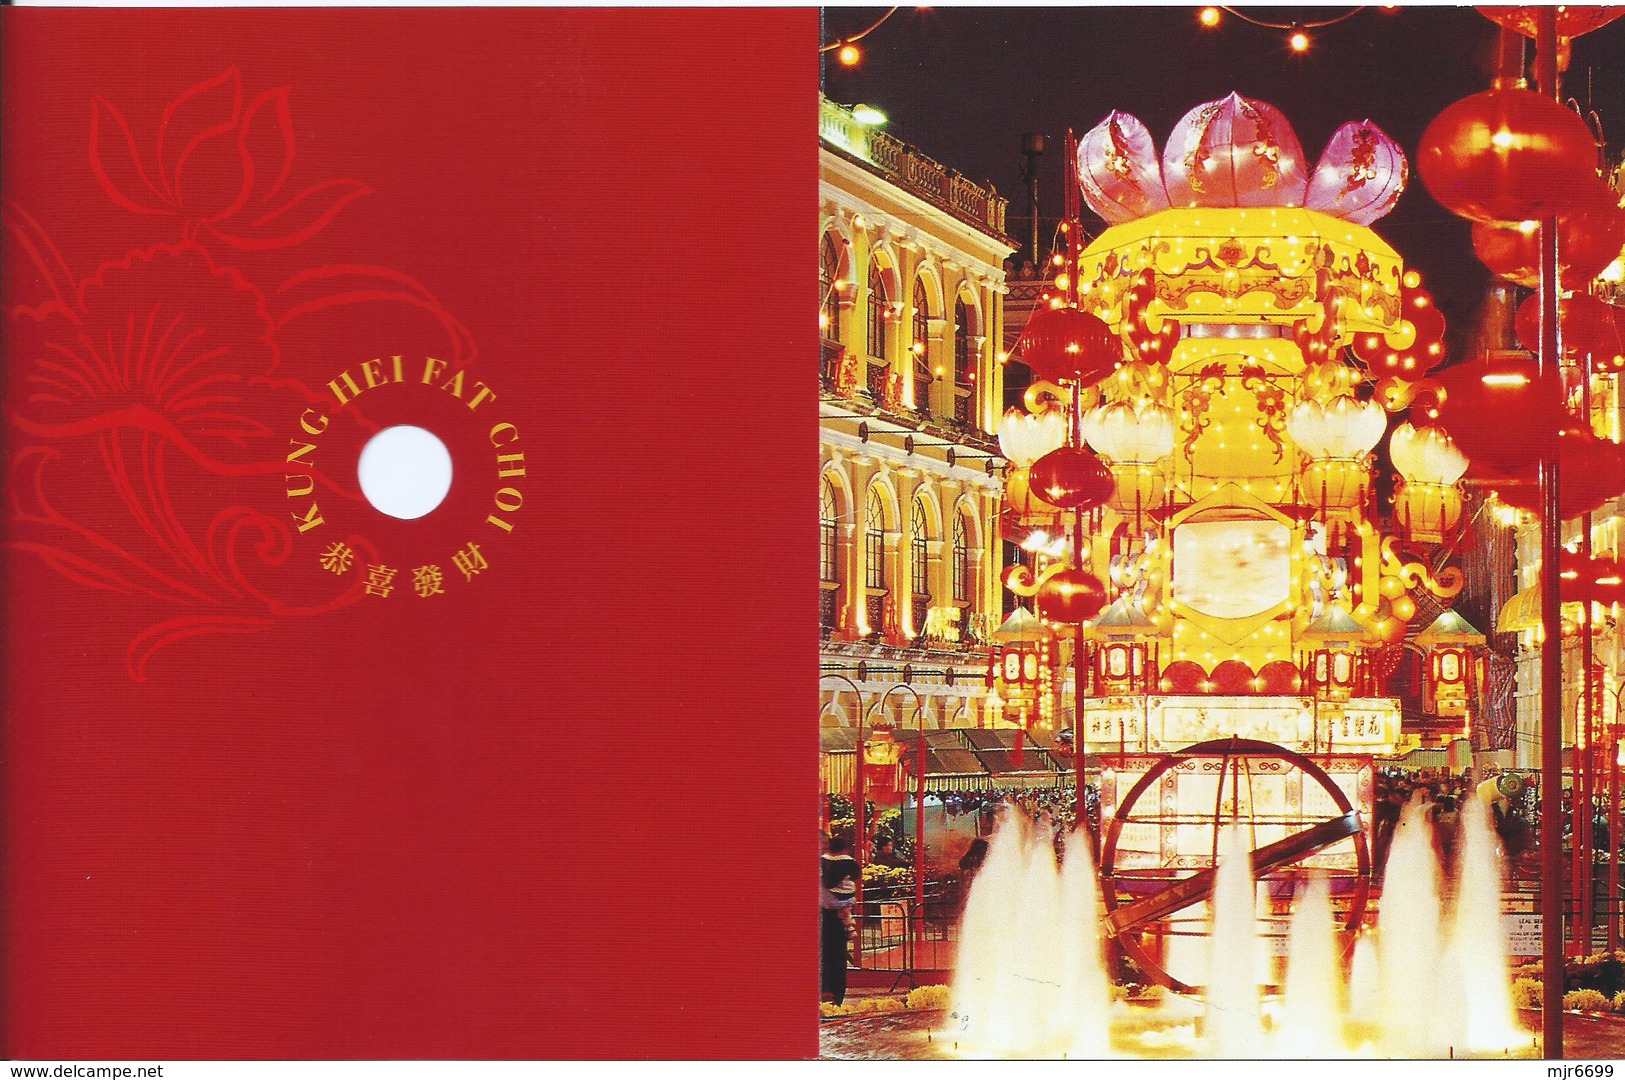 MACAU 1999 NEW YEAR GREETING CARD & POSTAGE PAID COVER, POST OFFICE CODE #BPK005 - Interi Postali